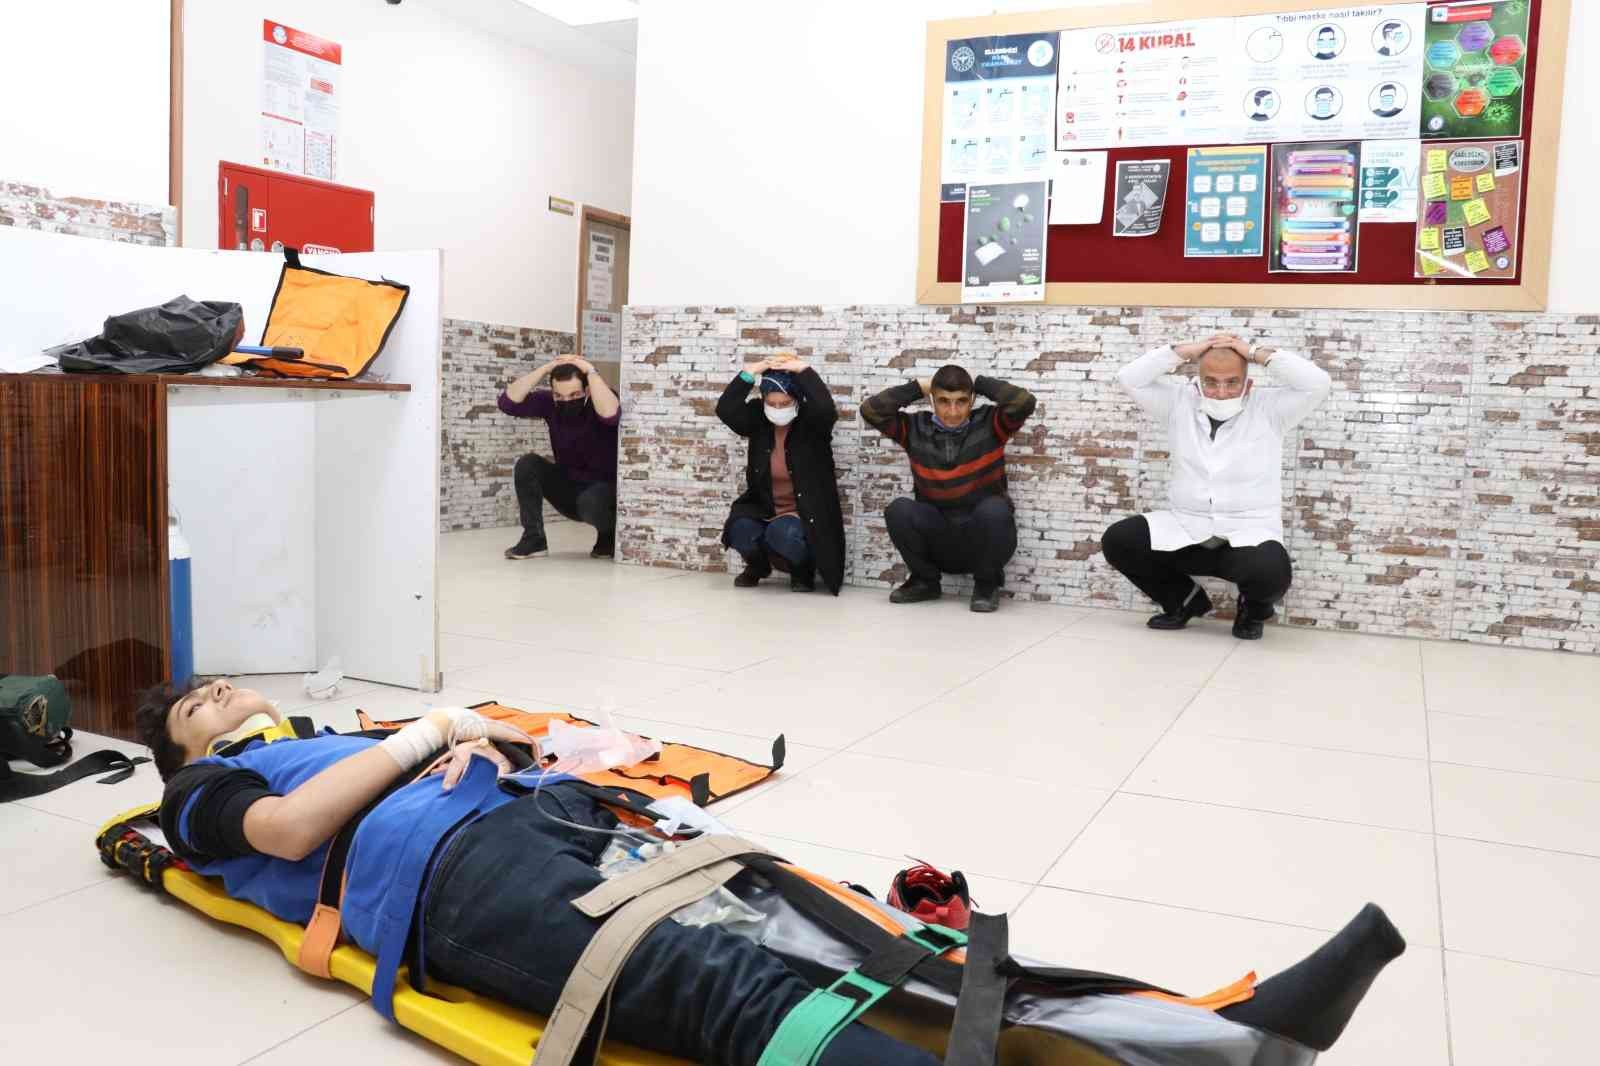 Kahramanmaraş’ta 6.4’lük deprem tatbikatı #kahramanmaras